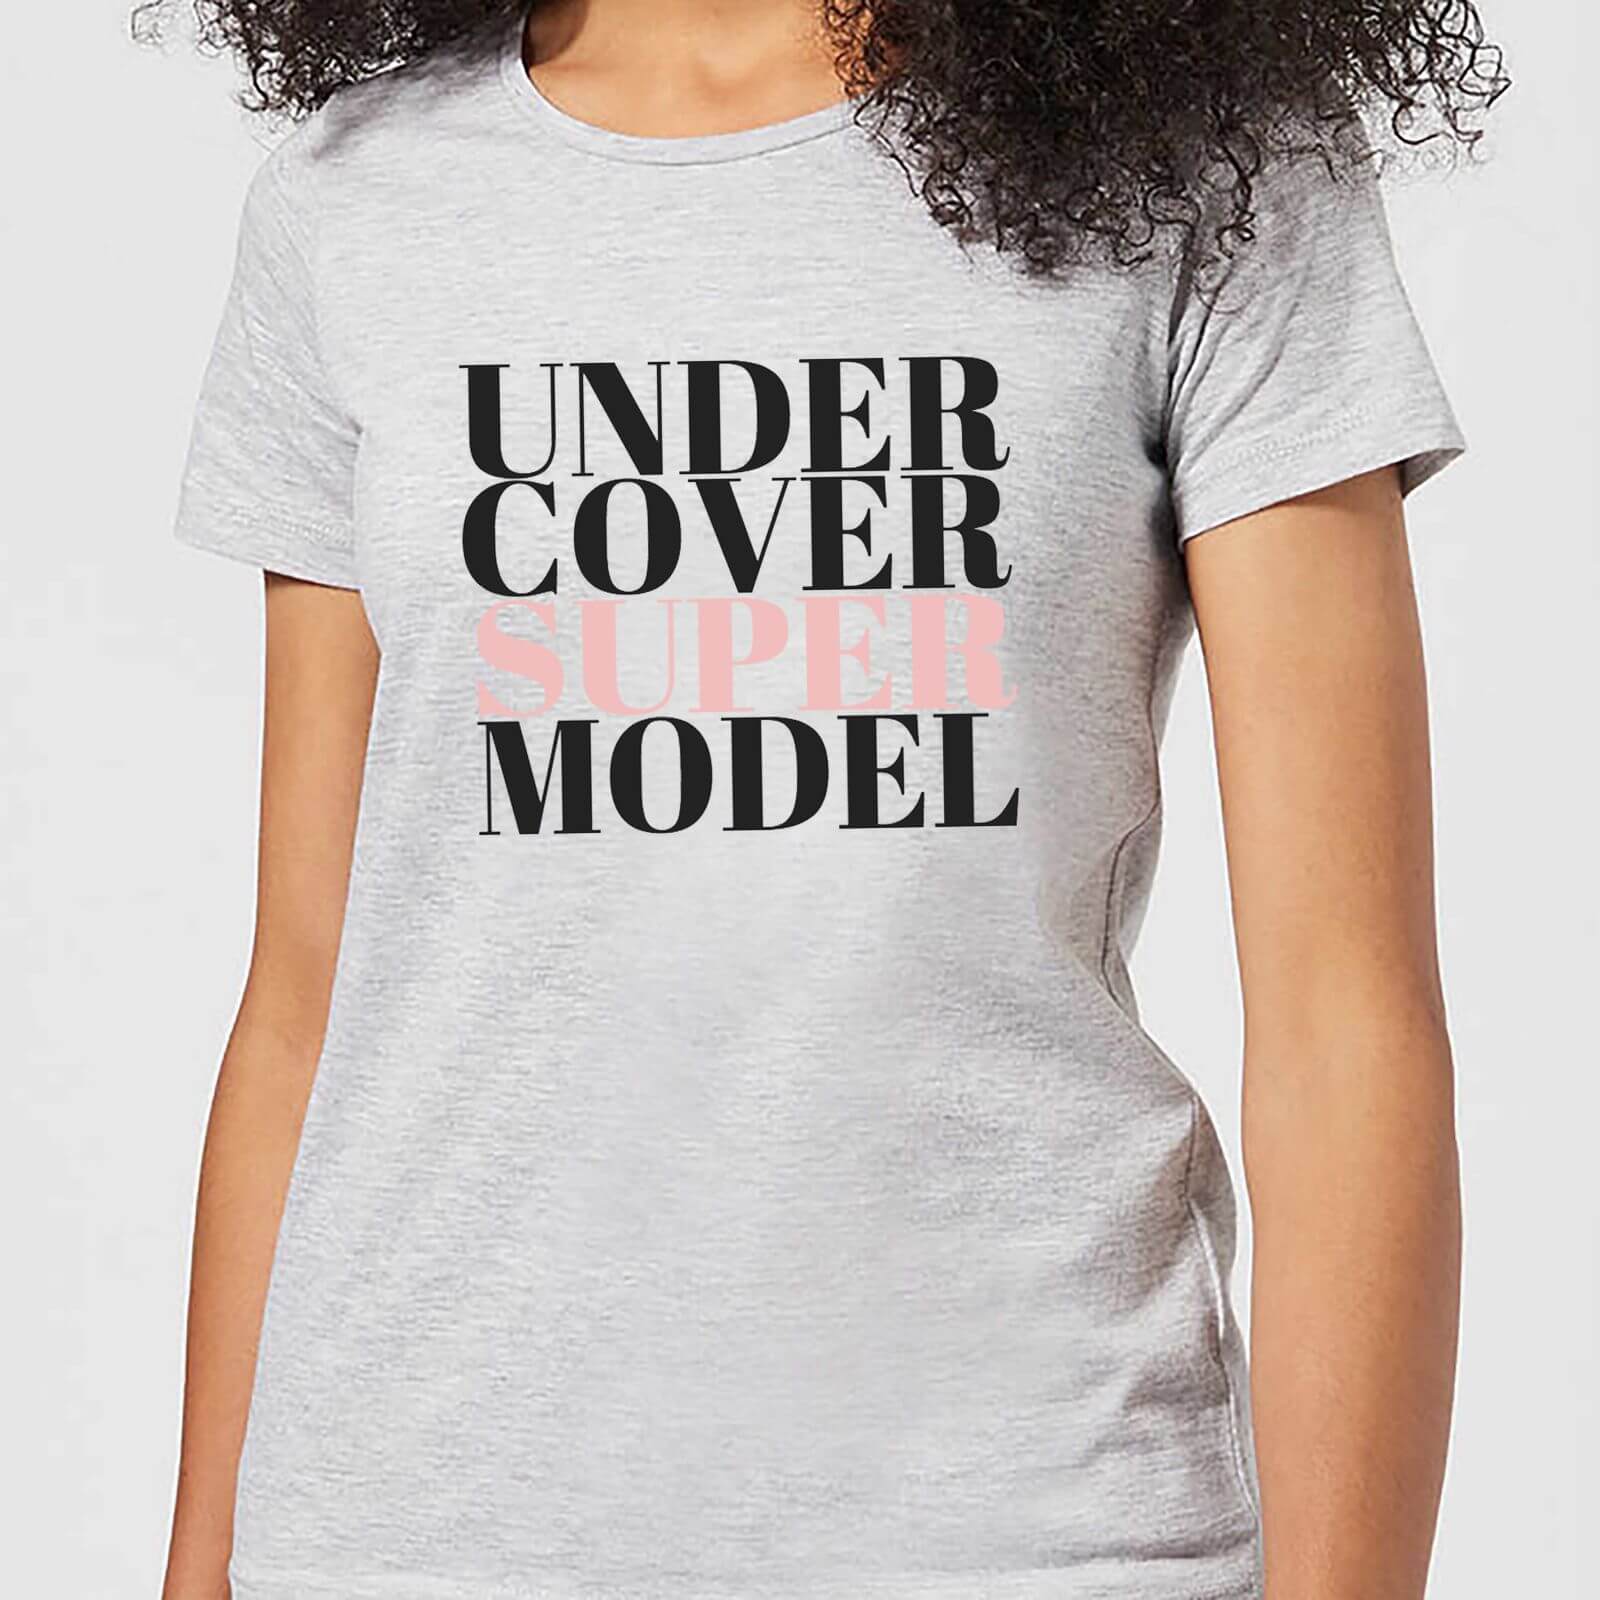 Be My Pretty Under Cover Super Model Women's T-Shirt - Grey - 3XL - Grey